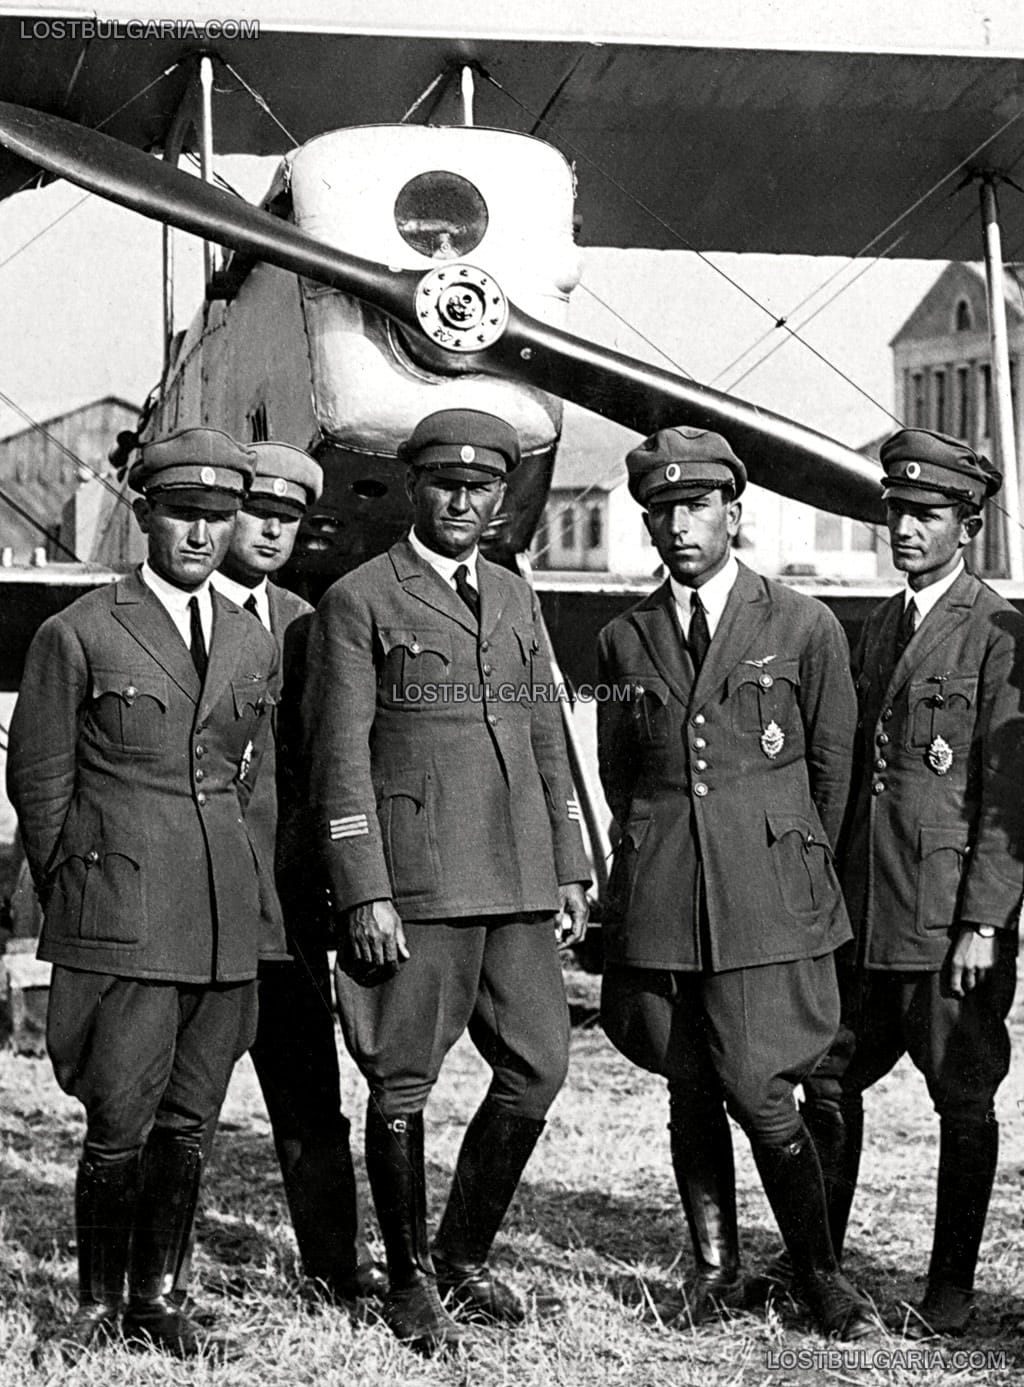 Български авиатори пред самолет Потез 17 (Potez XVII), летище Божурище, 1928 г.